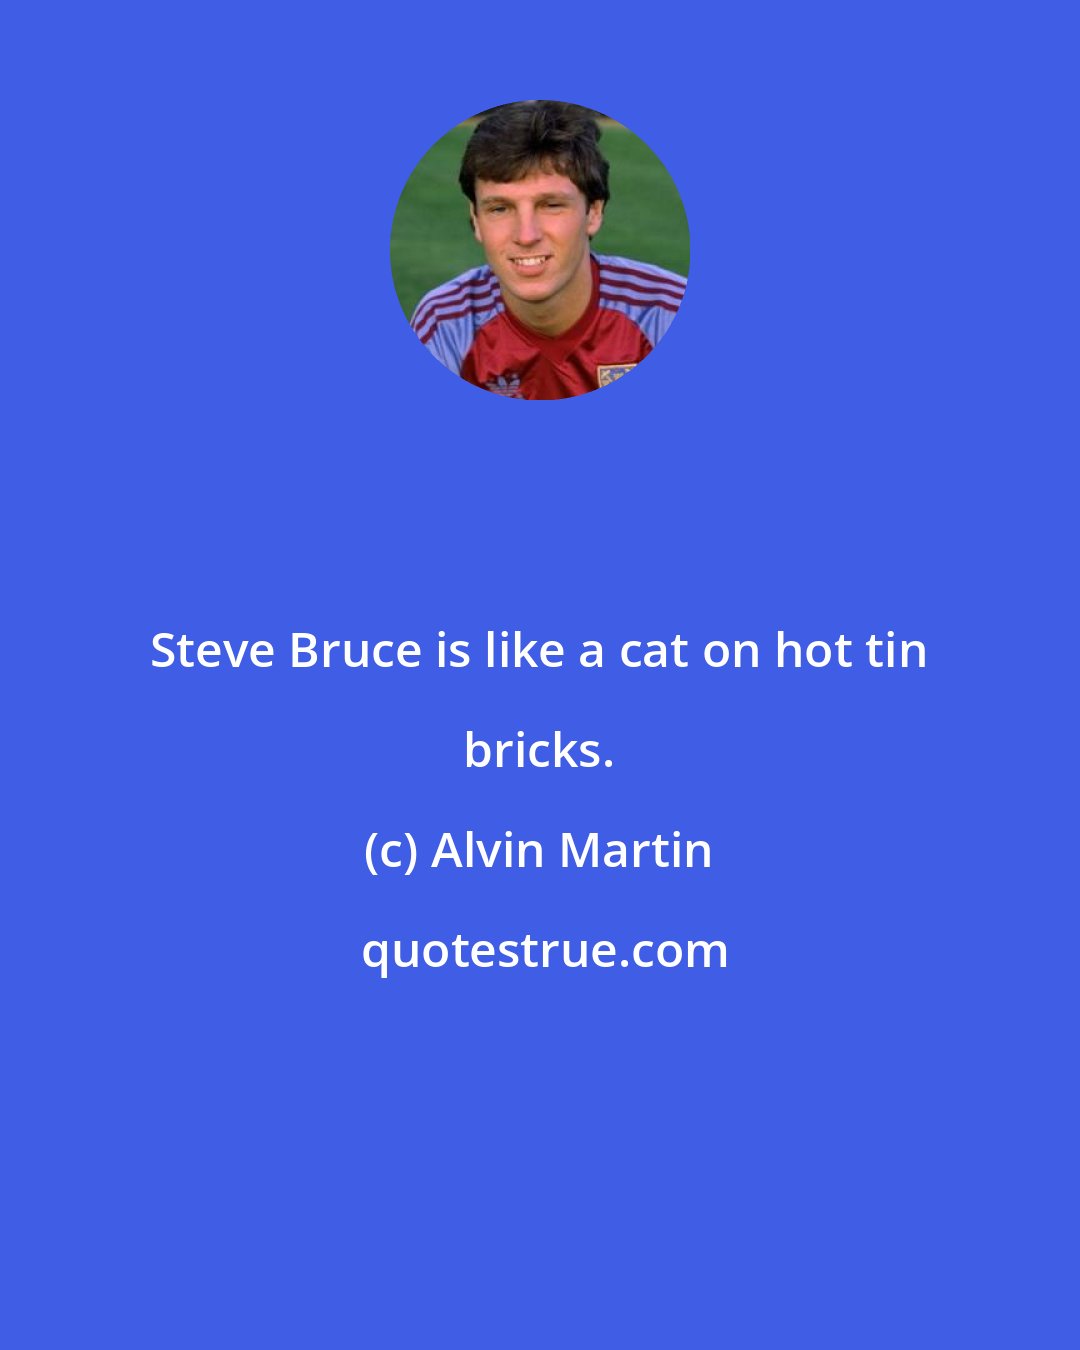 Alvin Martin: Steve Bruce is like a cat on hot tin bricks.